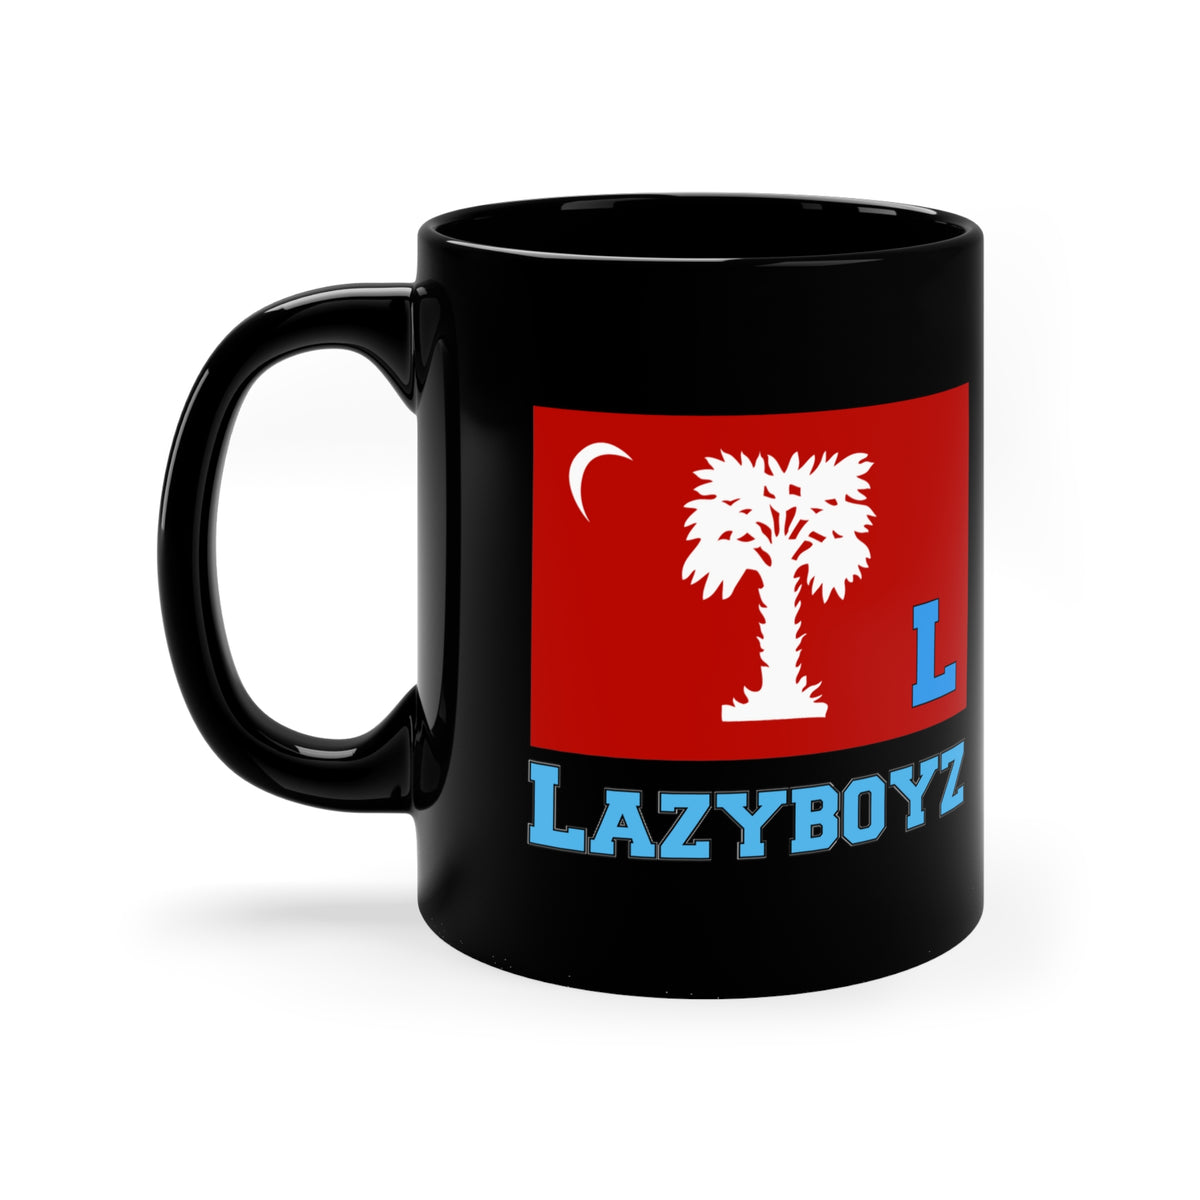 Lima Company Lazyboyz with Big Red Black Coffee Mug, 11oz